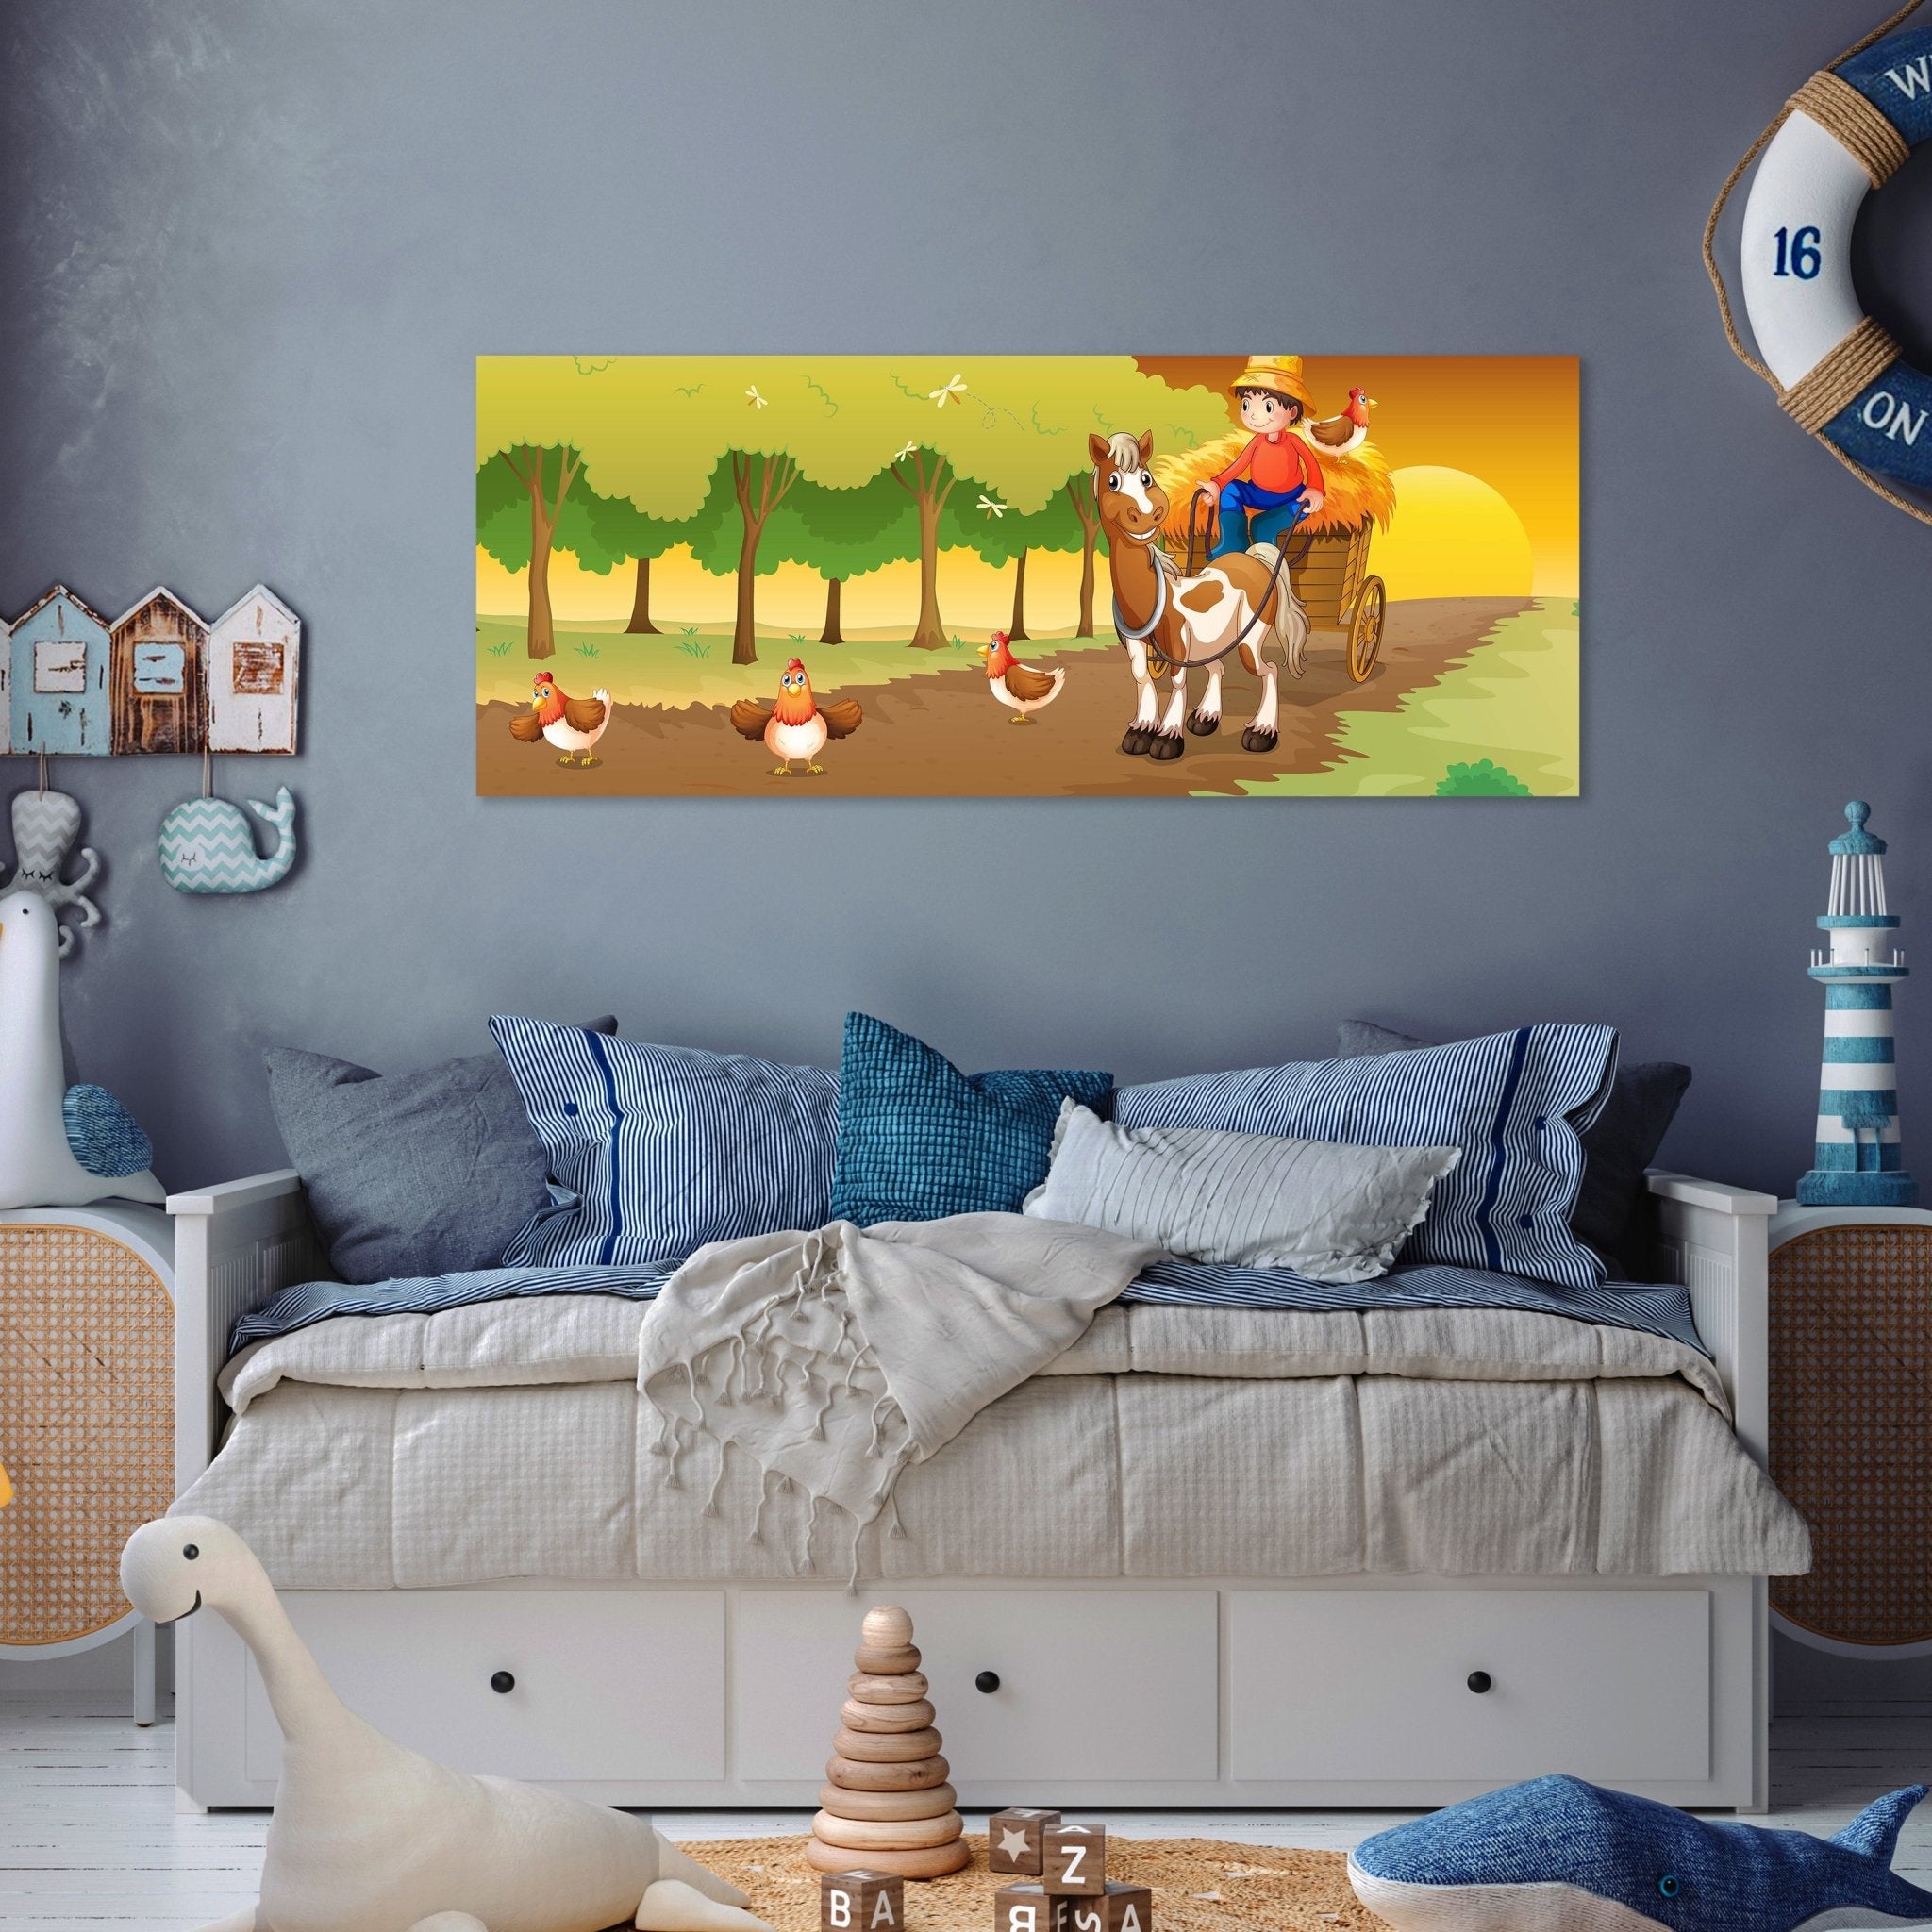 Leinwandbild Farmer mit Pferdekutsche M0499 kaufen - Bild 3